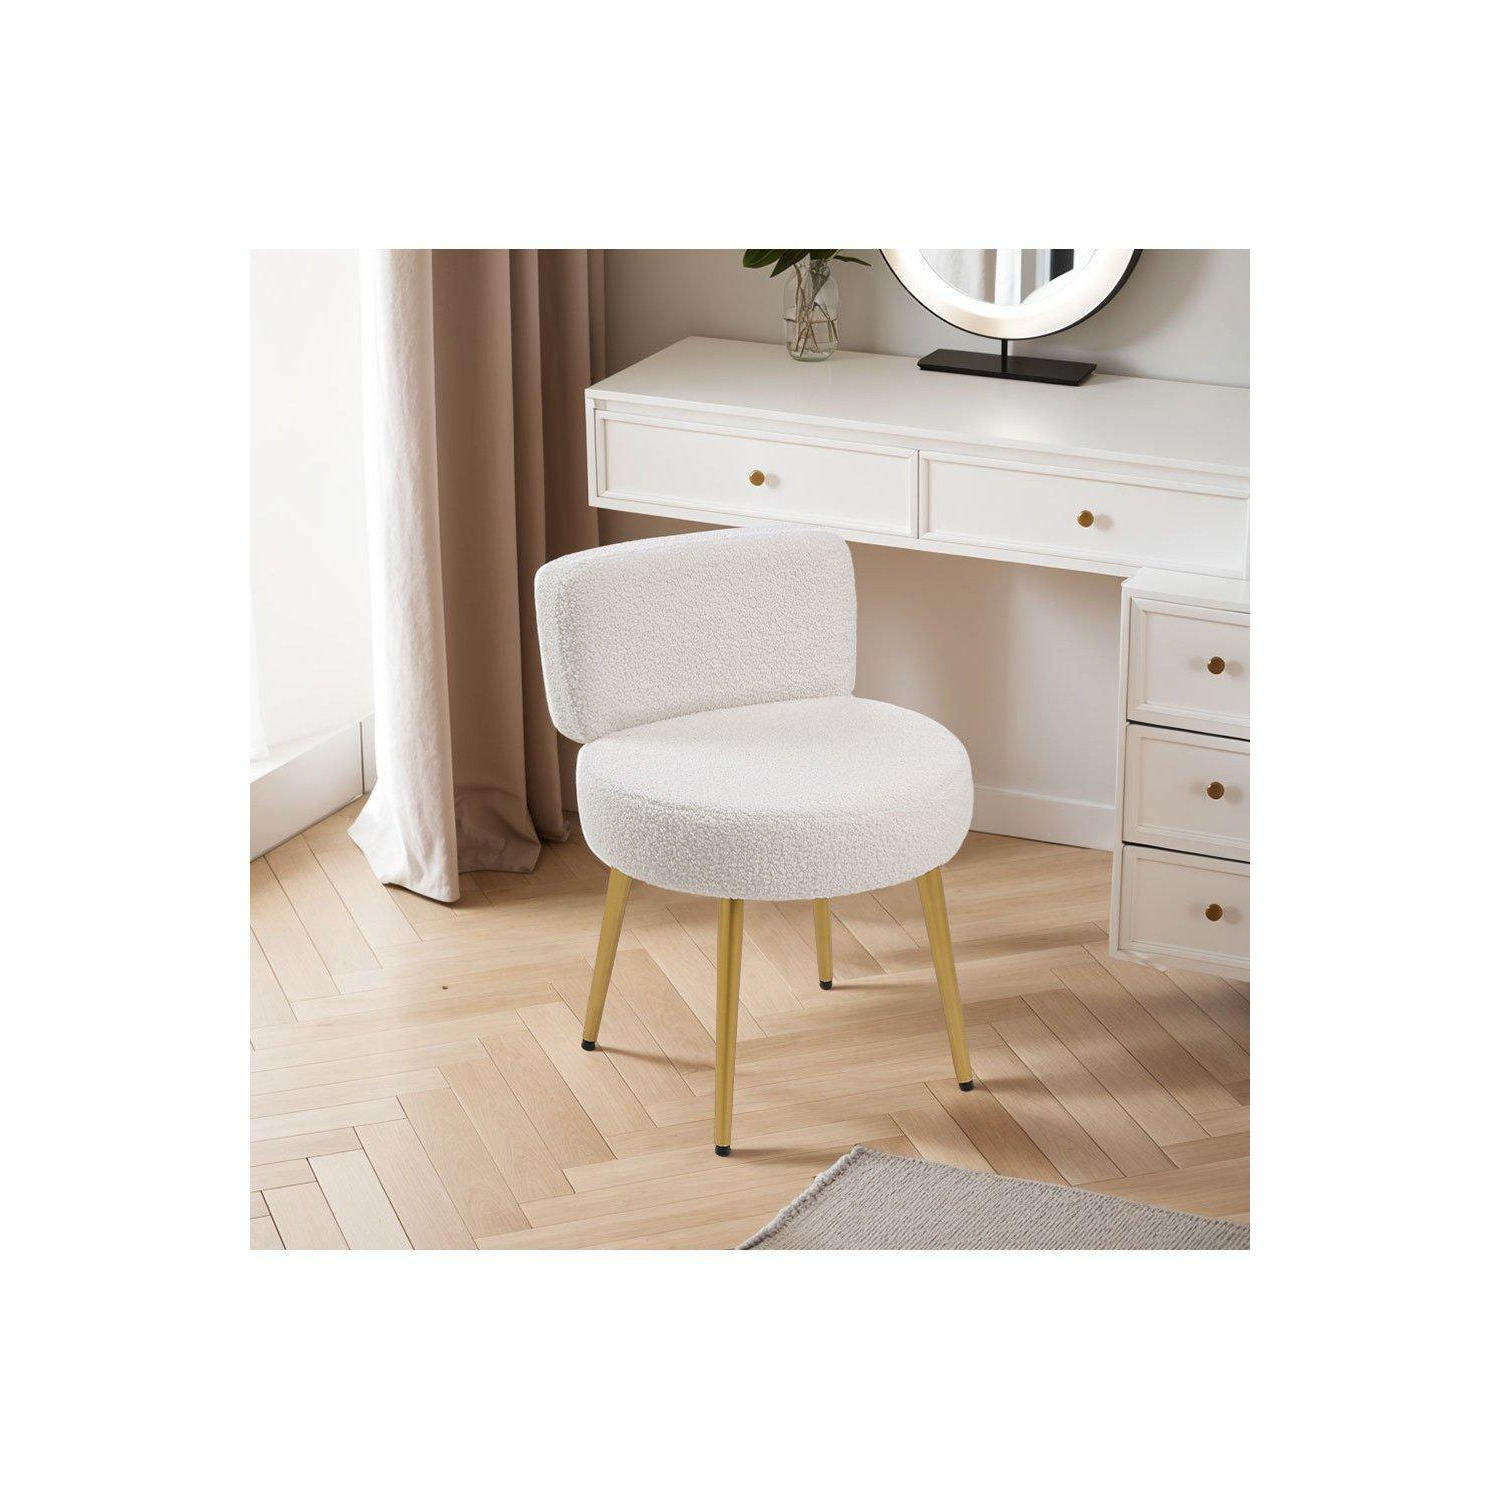 Cream Faux Fur Vanity Stool Chair with Metal Legs - image 1